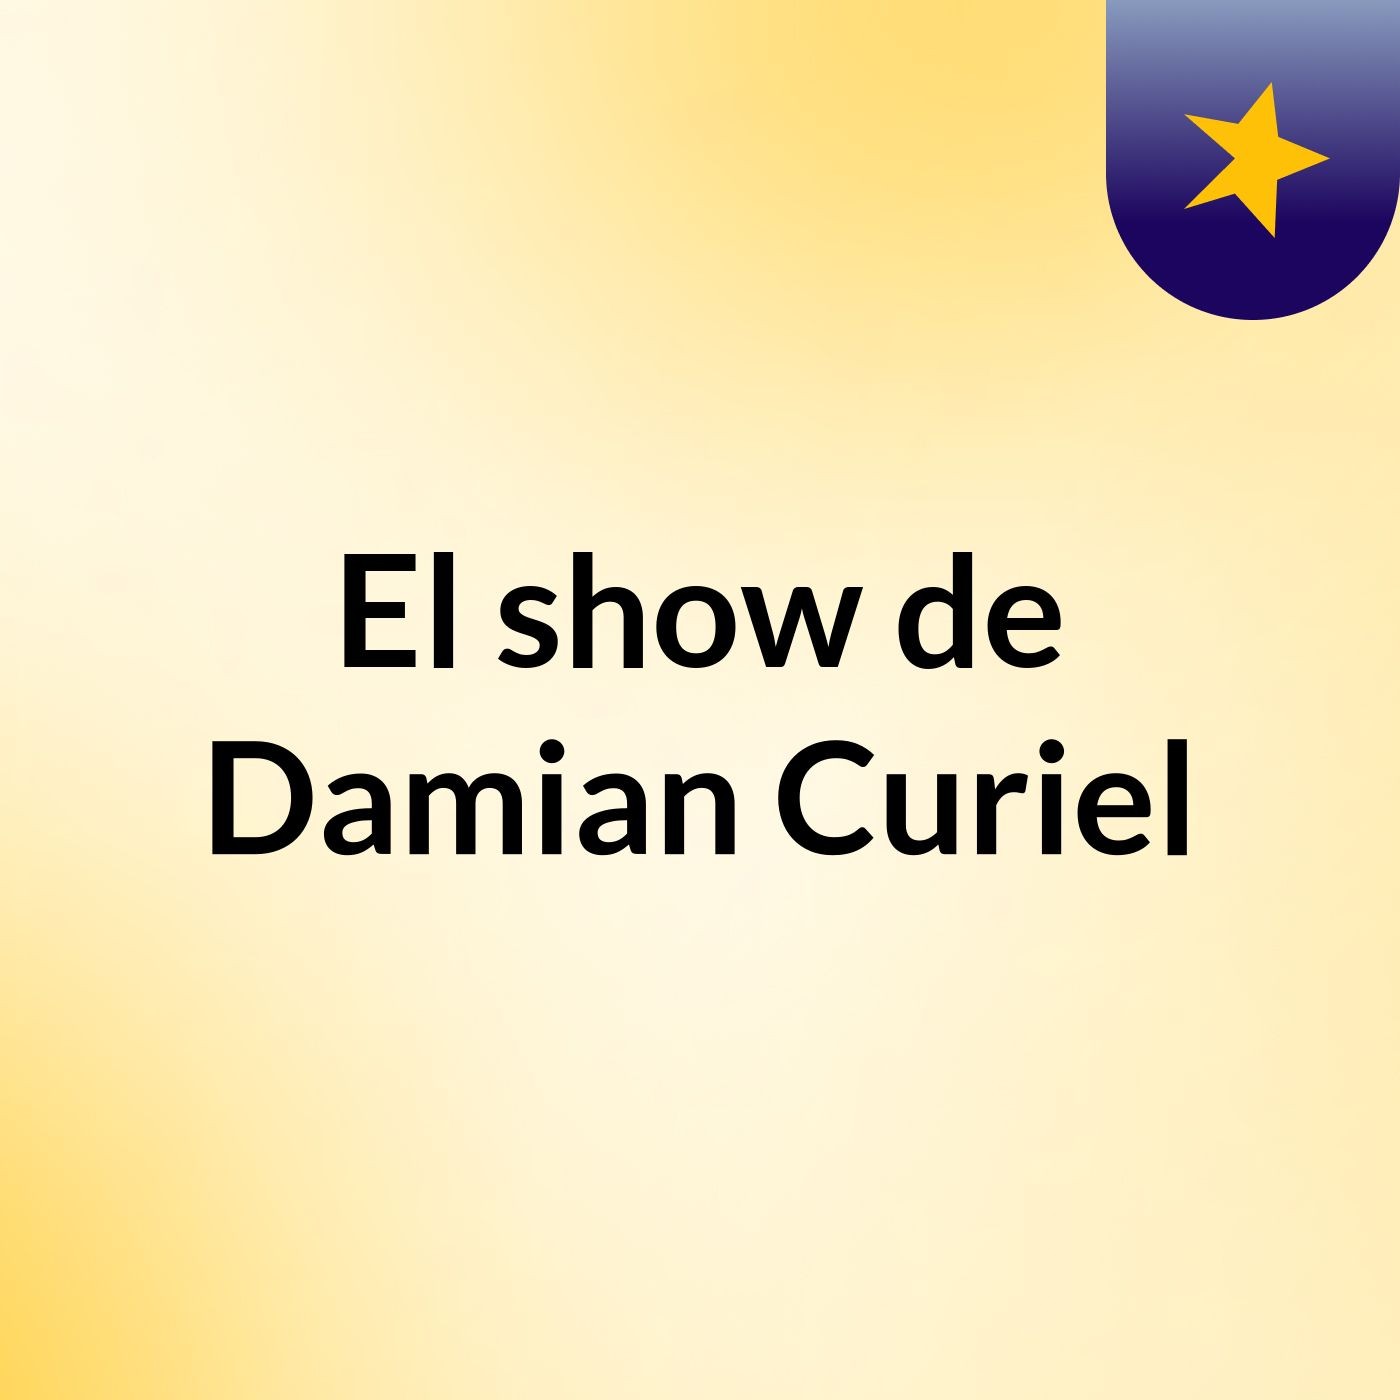 El show de Damian Curiel